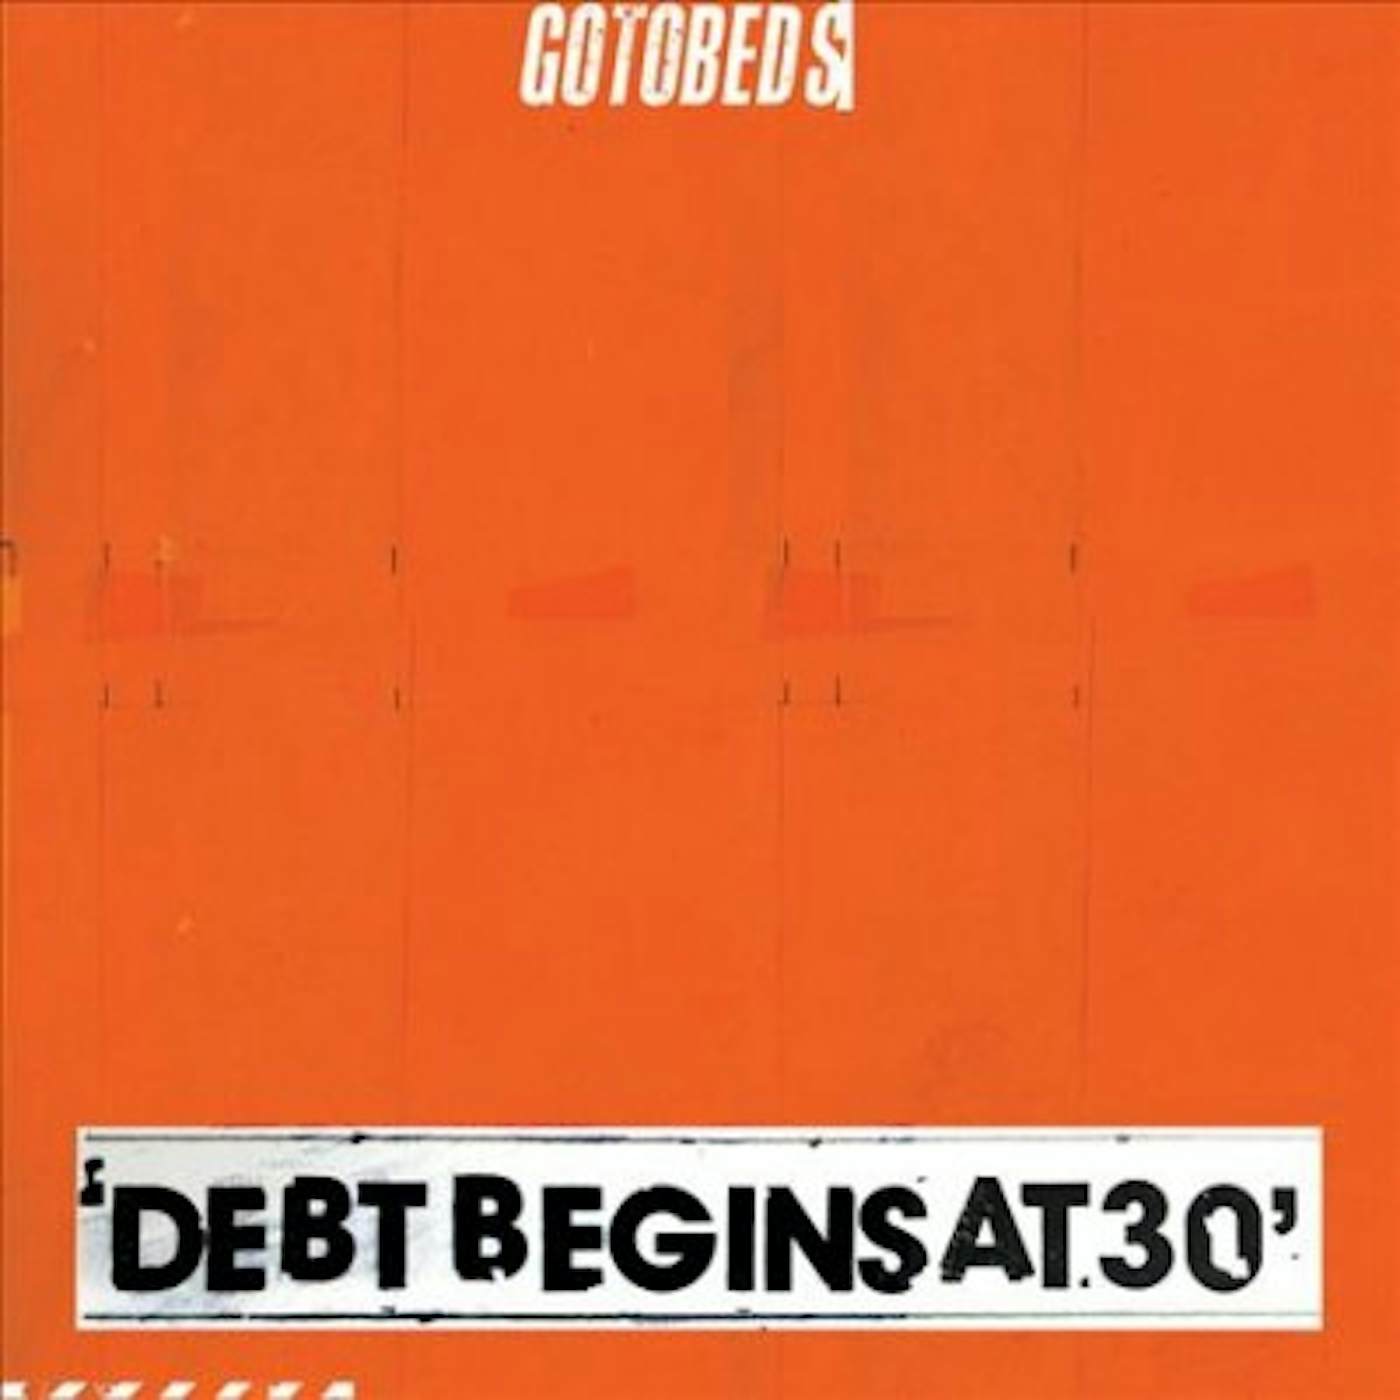 The Gotobeds Debt Begins At 30 Vinyl Record